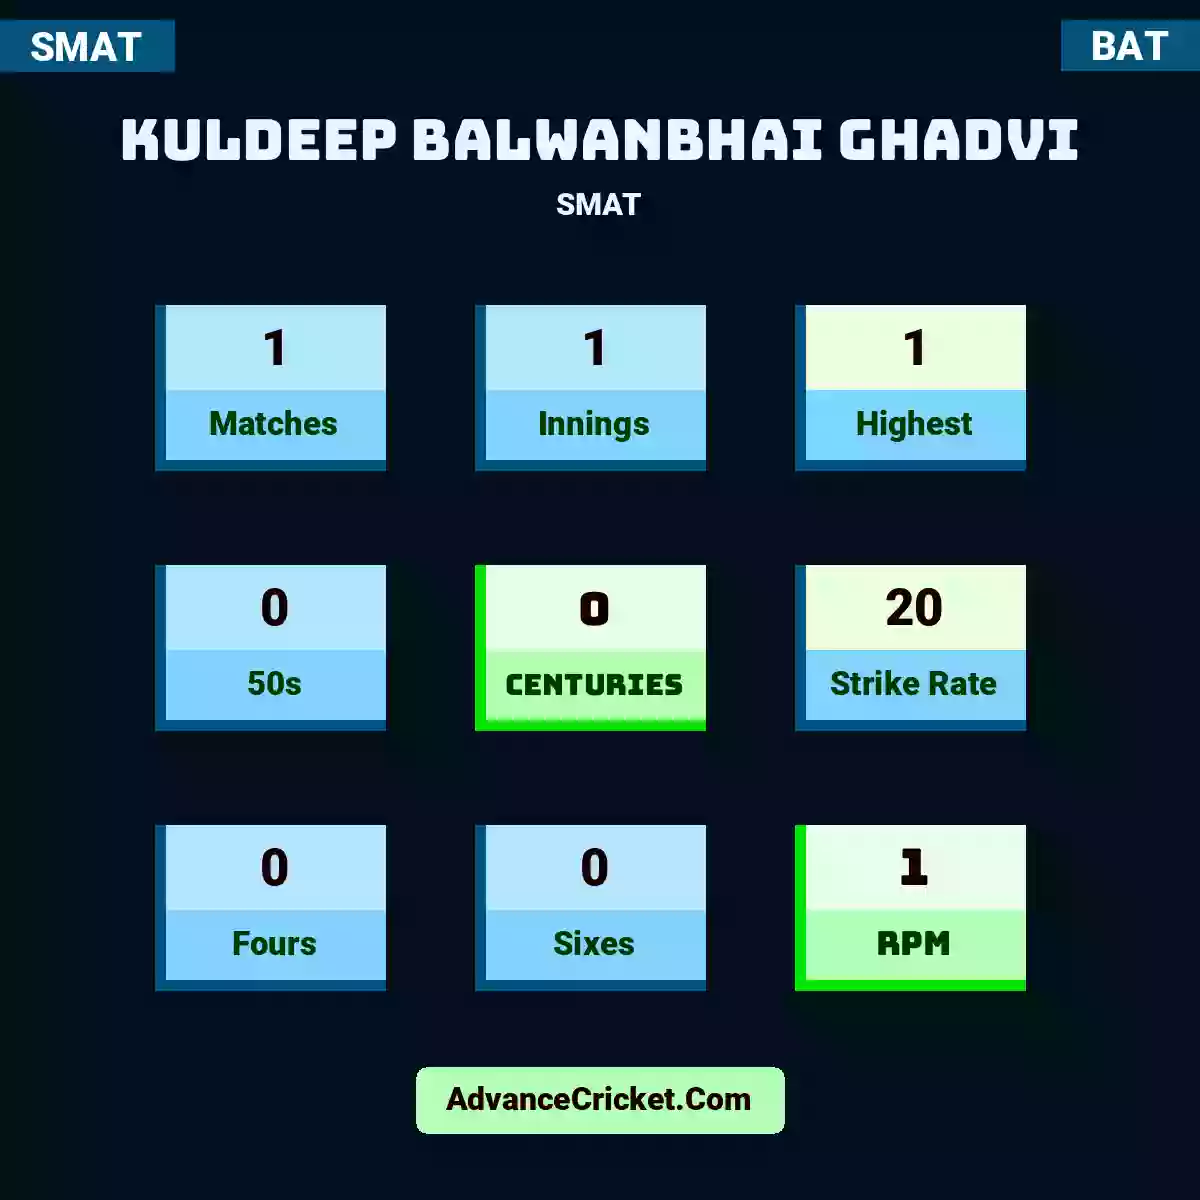 Kuldeep Balwanbhai Ghadvi SMAT , Kuldeep Balwanbhai Ghadvi played 1 matches, scored 1 runs as highest, 0 half-centuries, and 0 centuries, with a strike rate of 20. K.Ghadvi hit 0 fours and 0 sixes, with an RPM of 1.